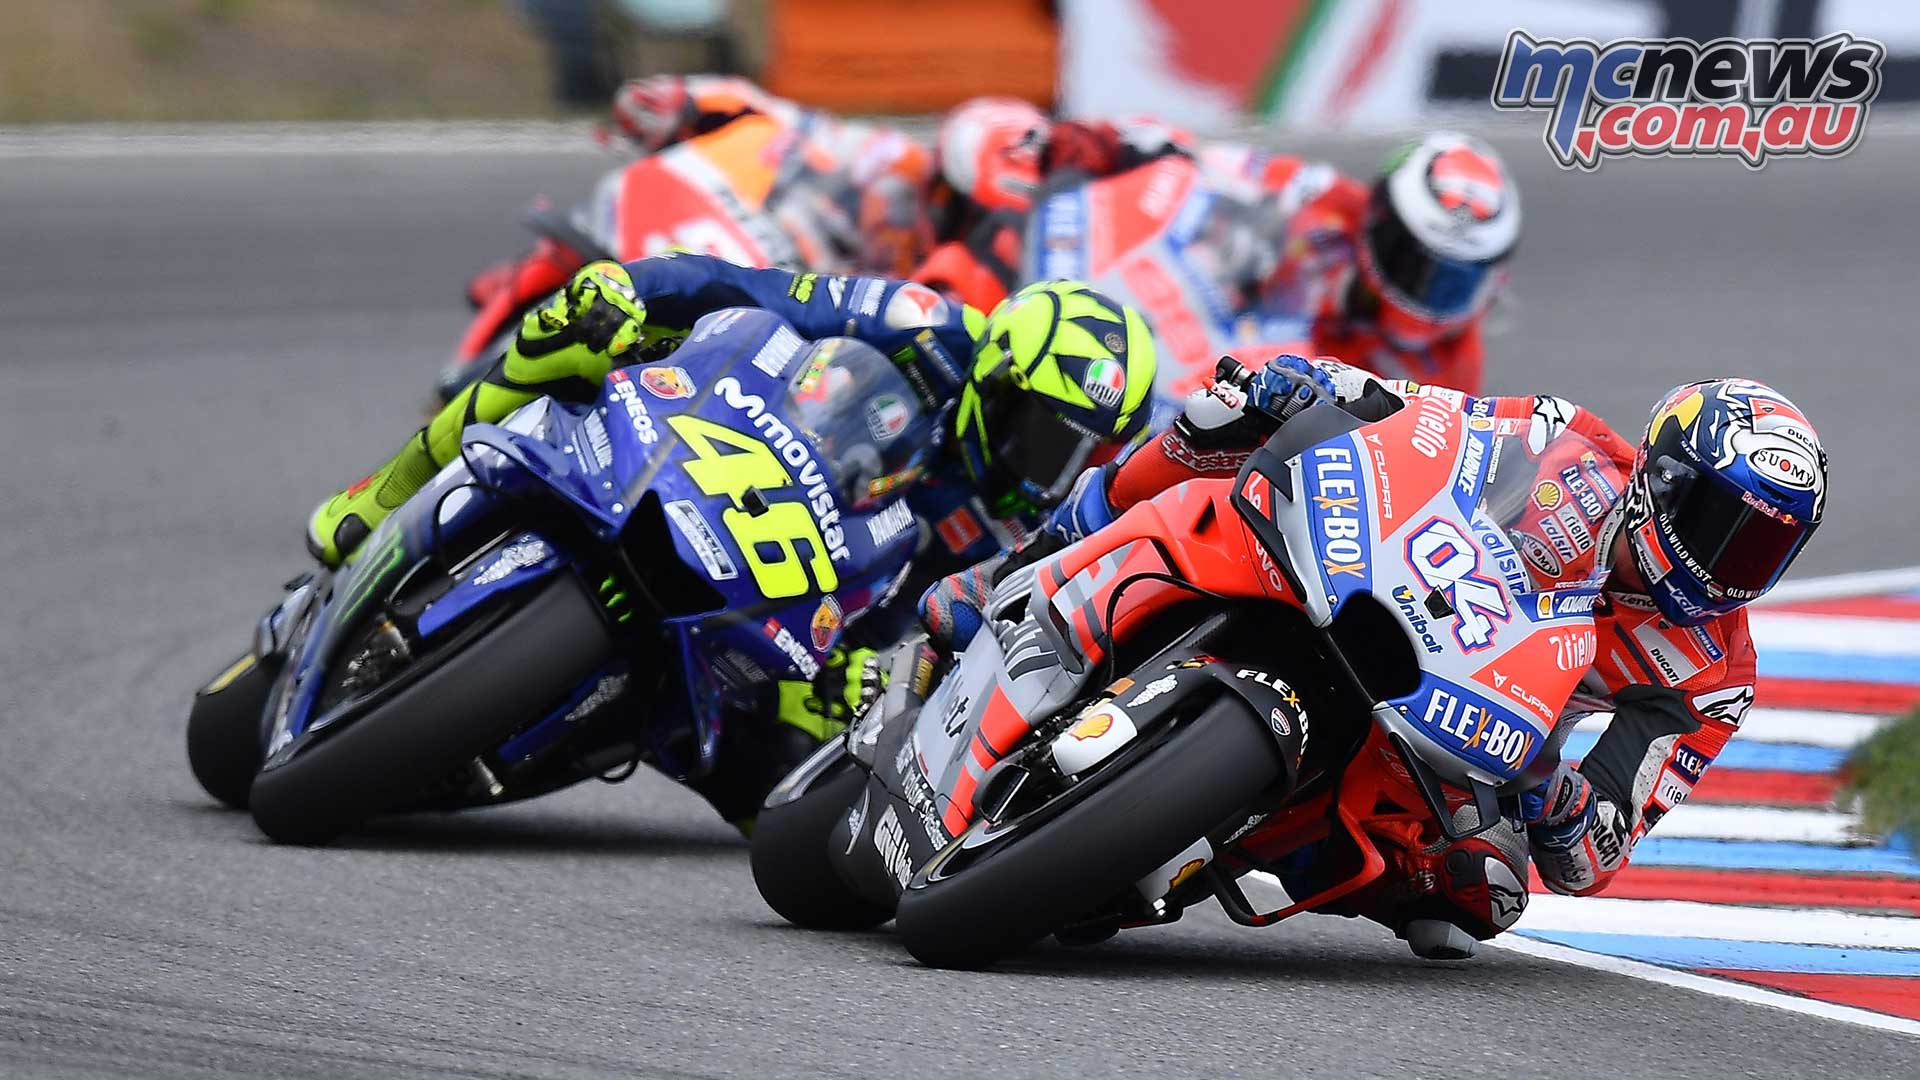 MotoGP: Hondas Aragon one-two / News / MICHELIN Motorsport